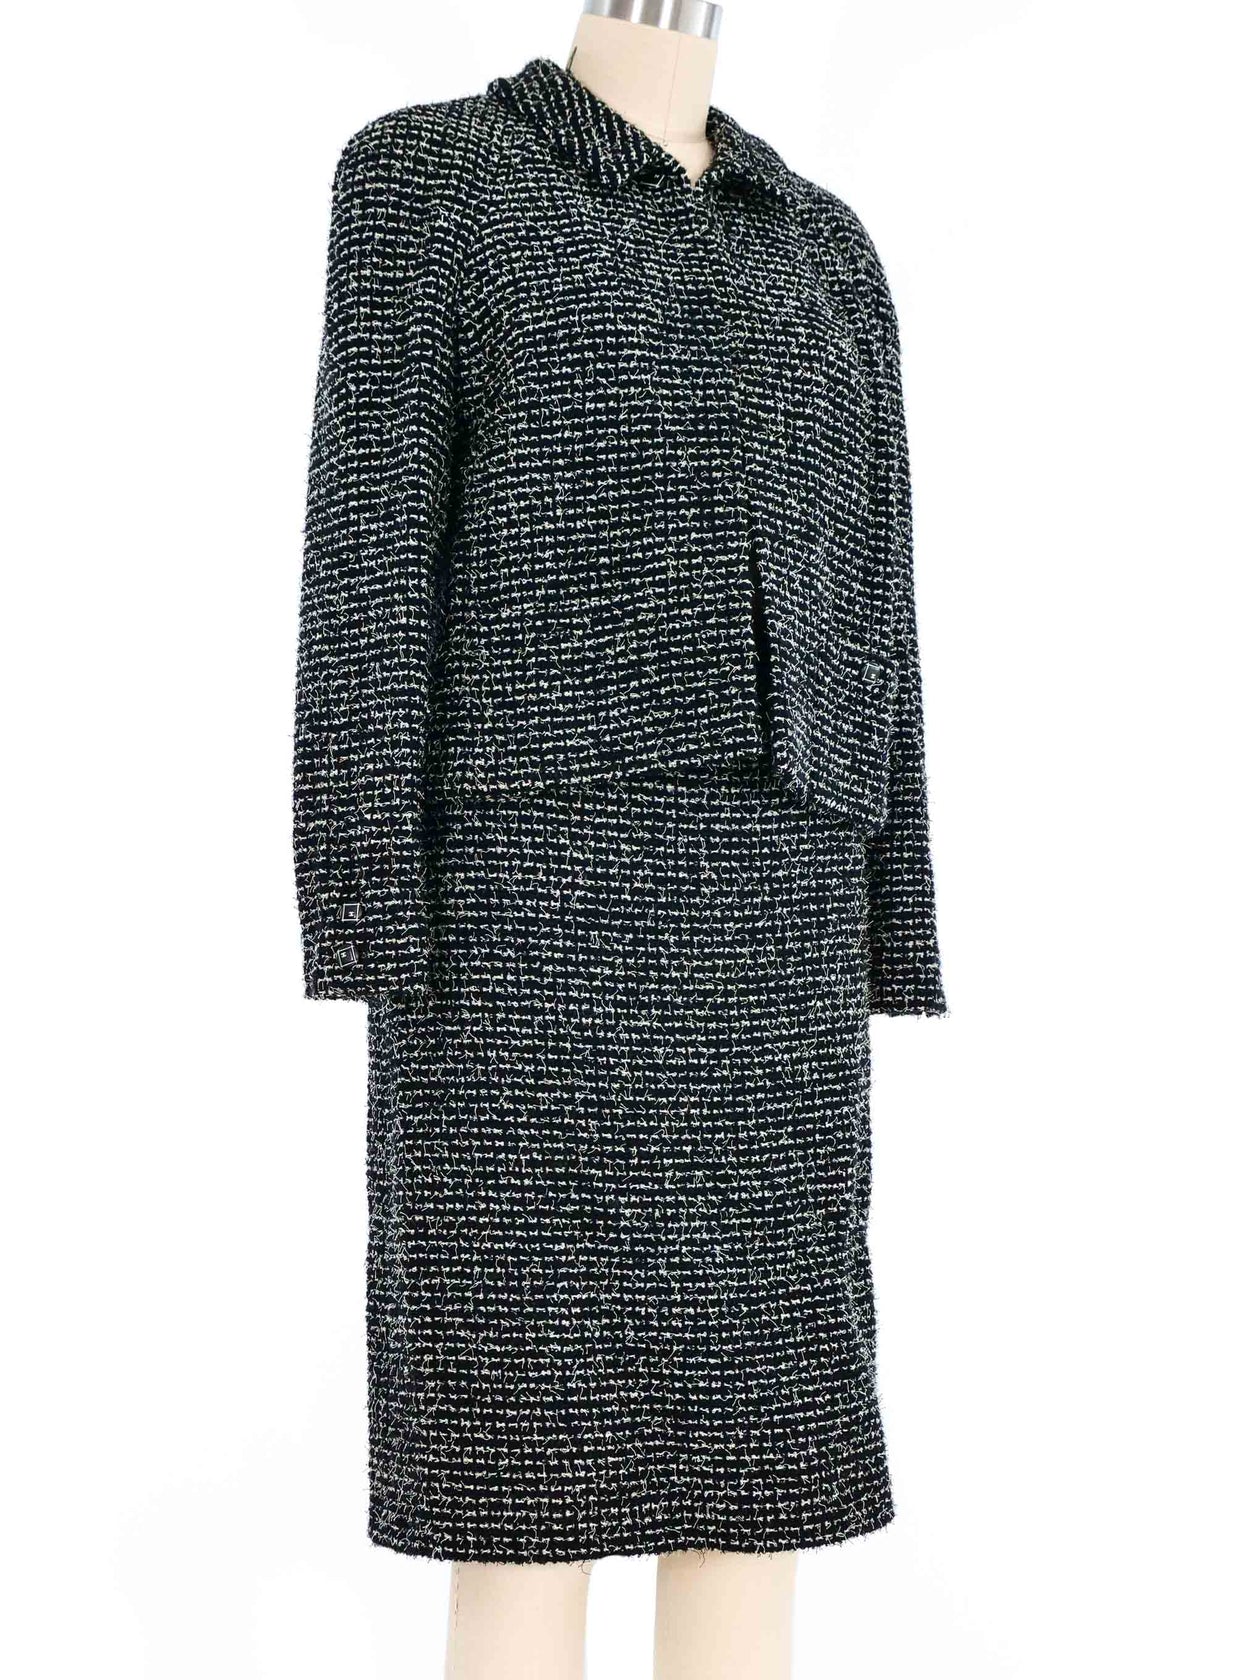 Gray Tweed Skirt Suit